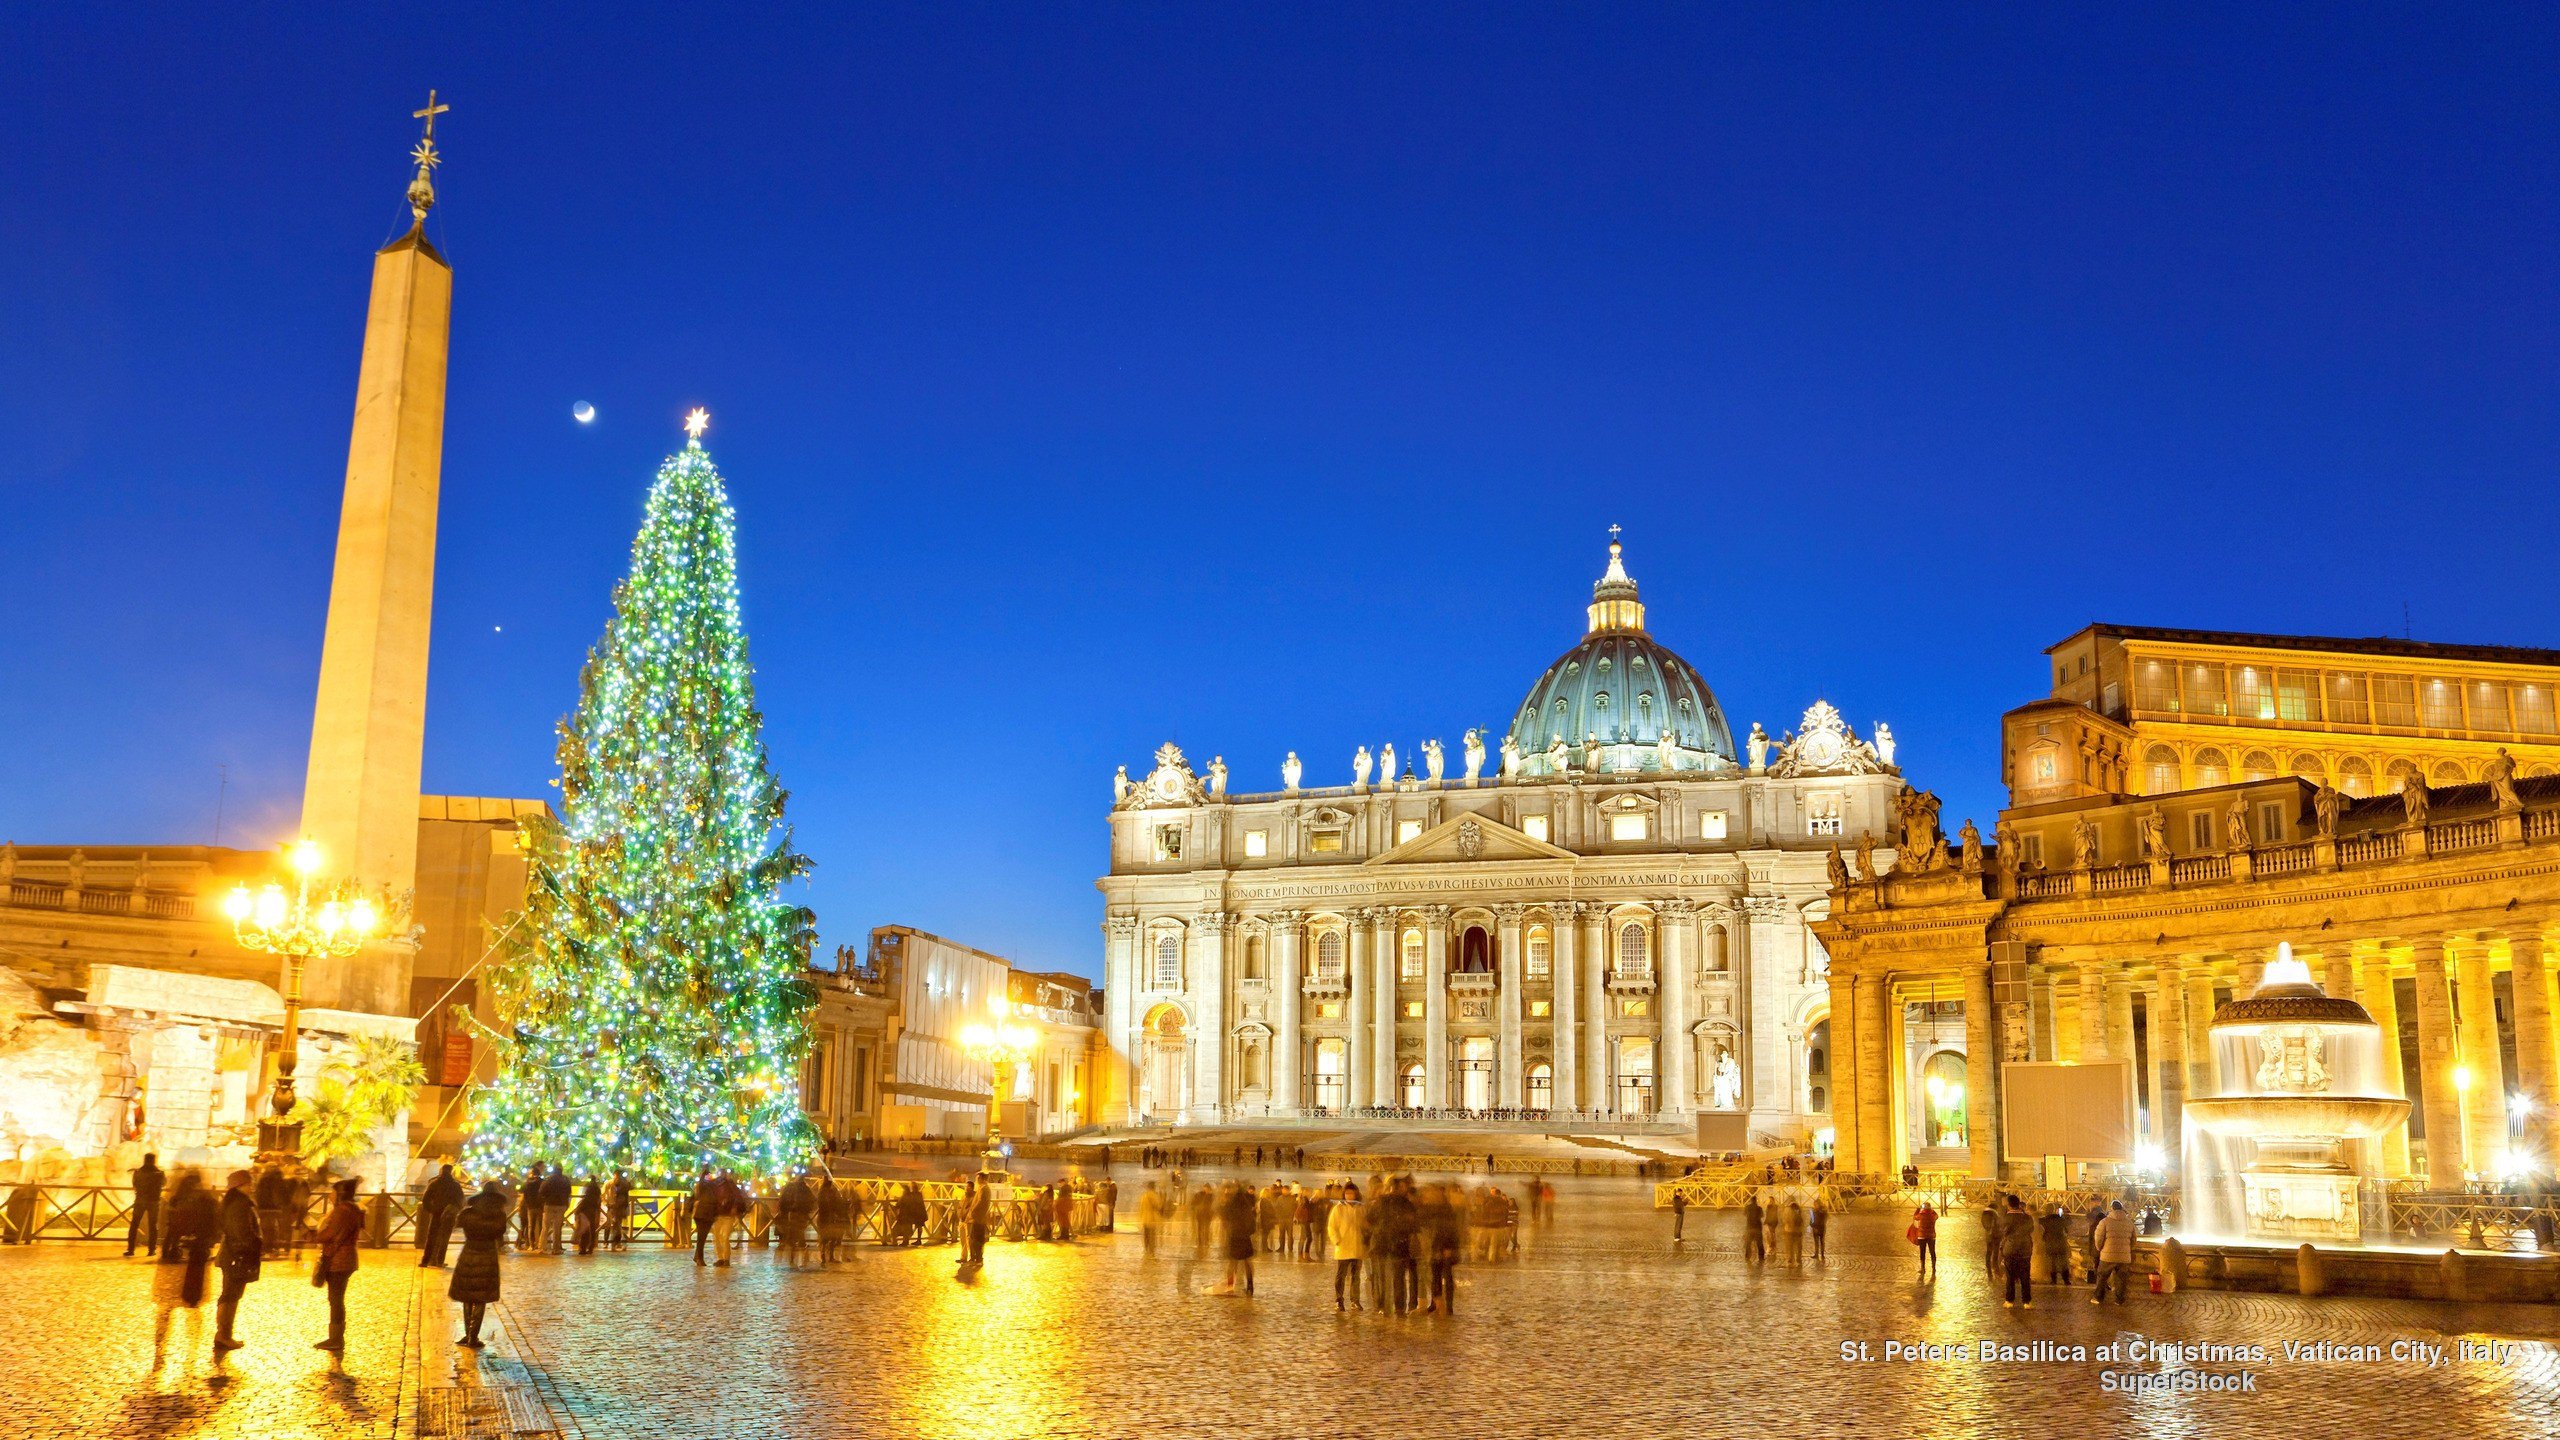 18 Most Beautiful Christmas Trees Around The World